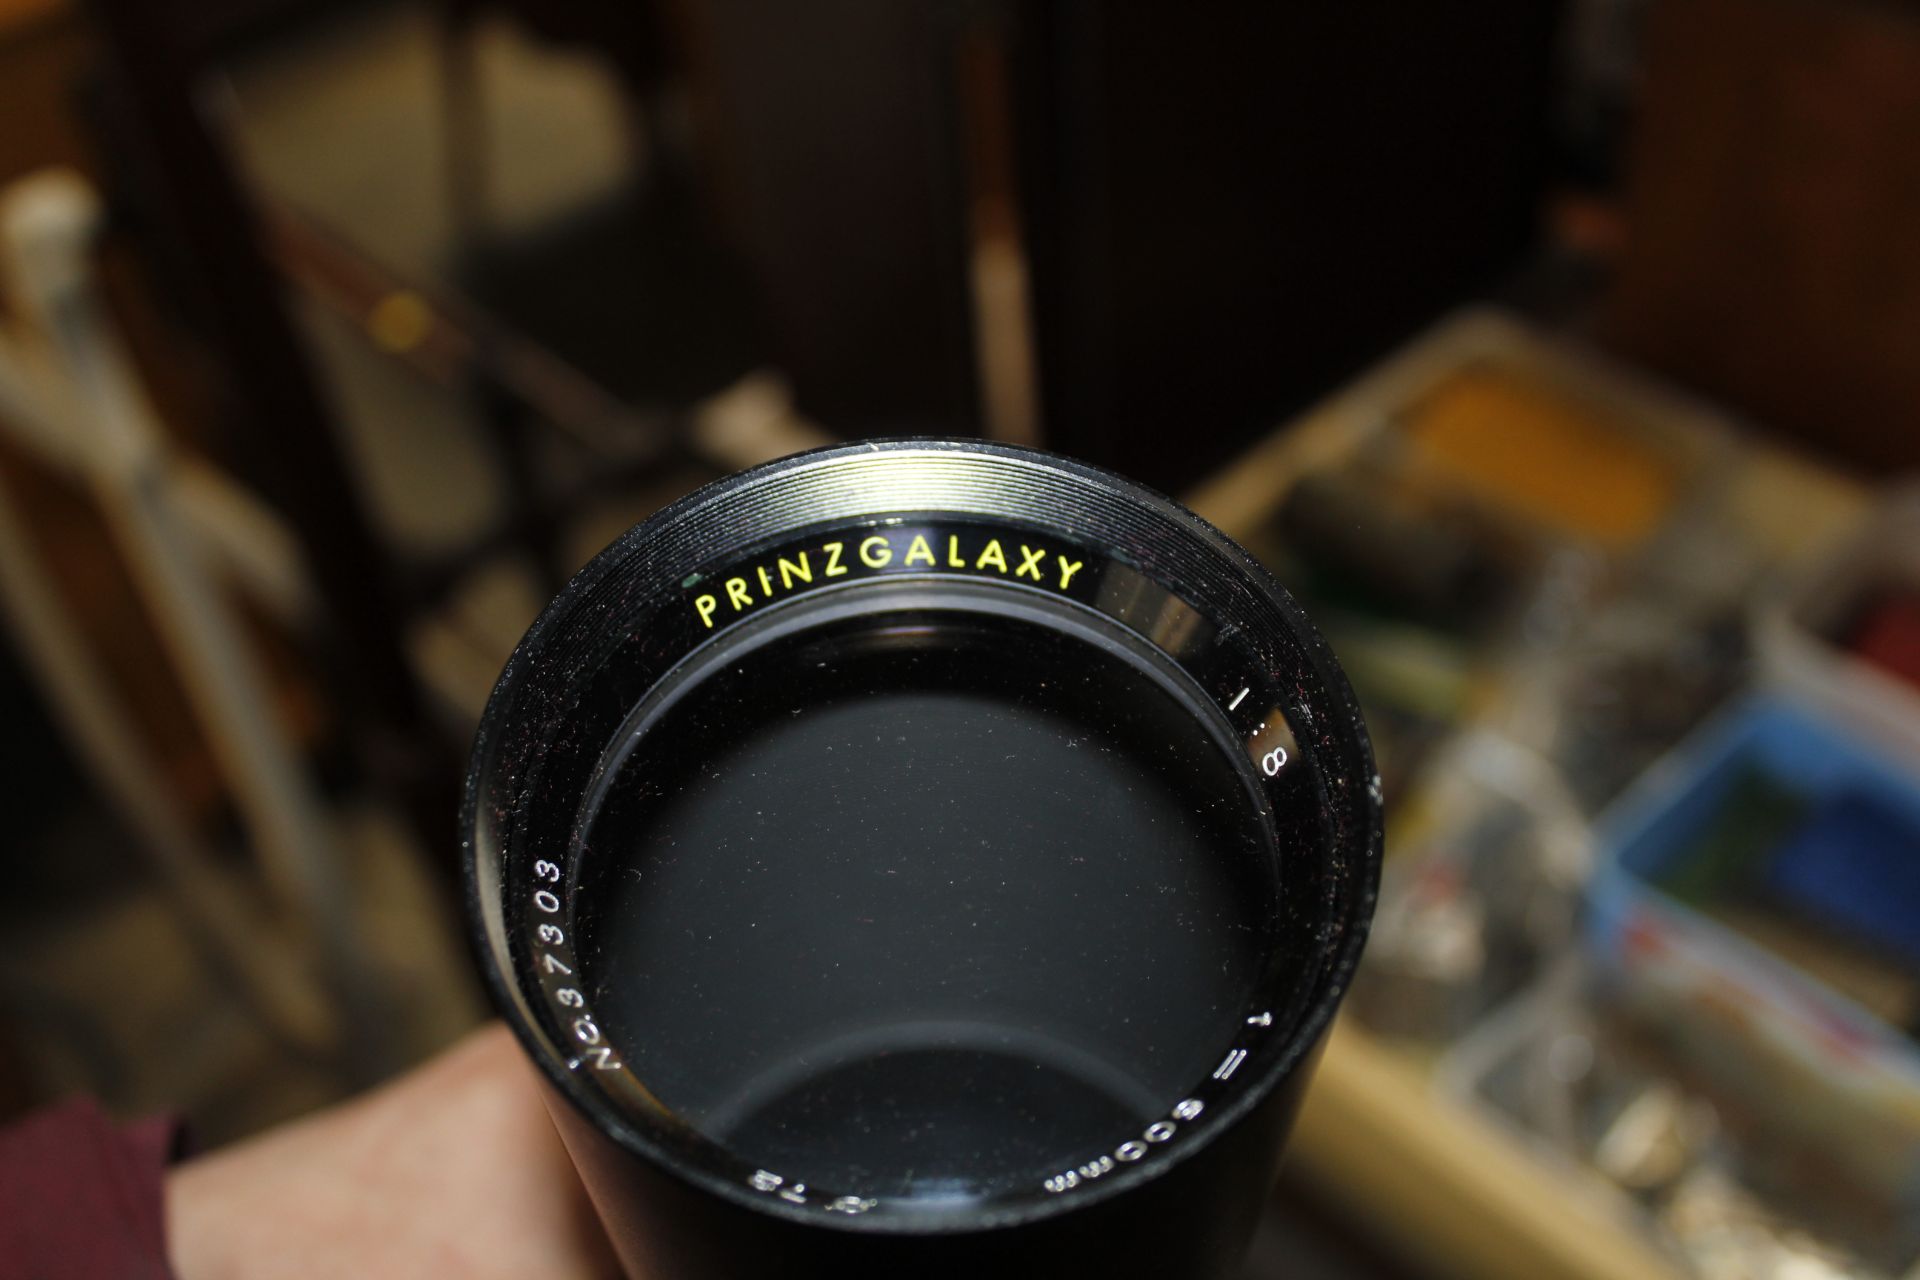 A Prinz Galaxy camera lens in case - Image 2 of 2